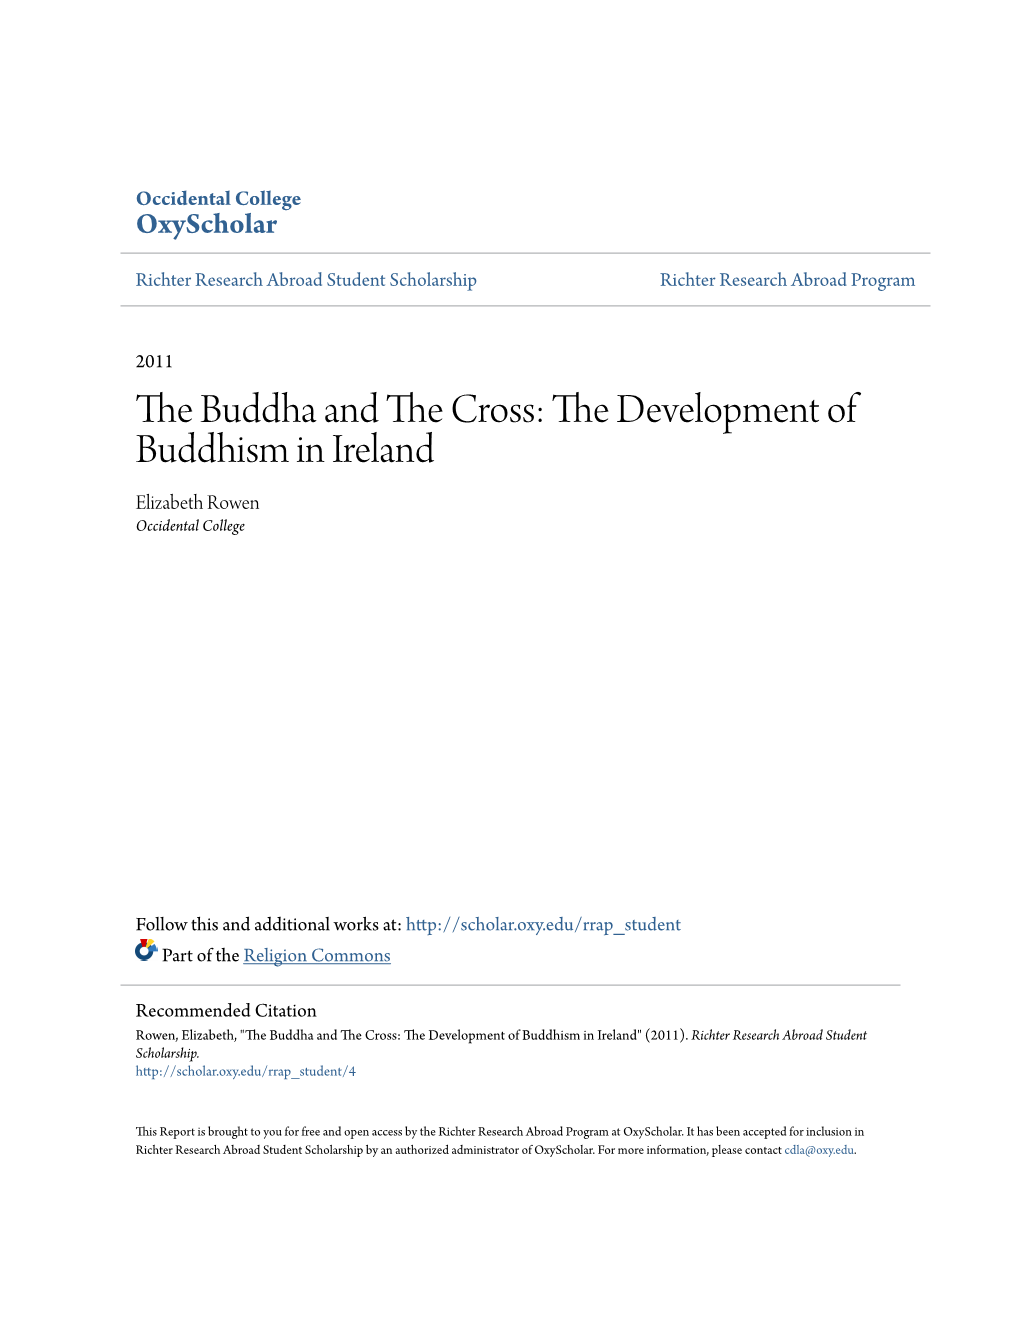 The Development of Buddhism in Ireland